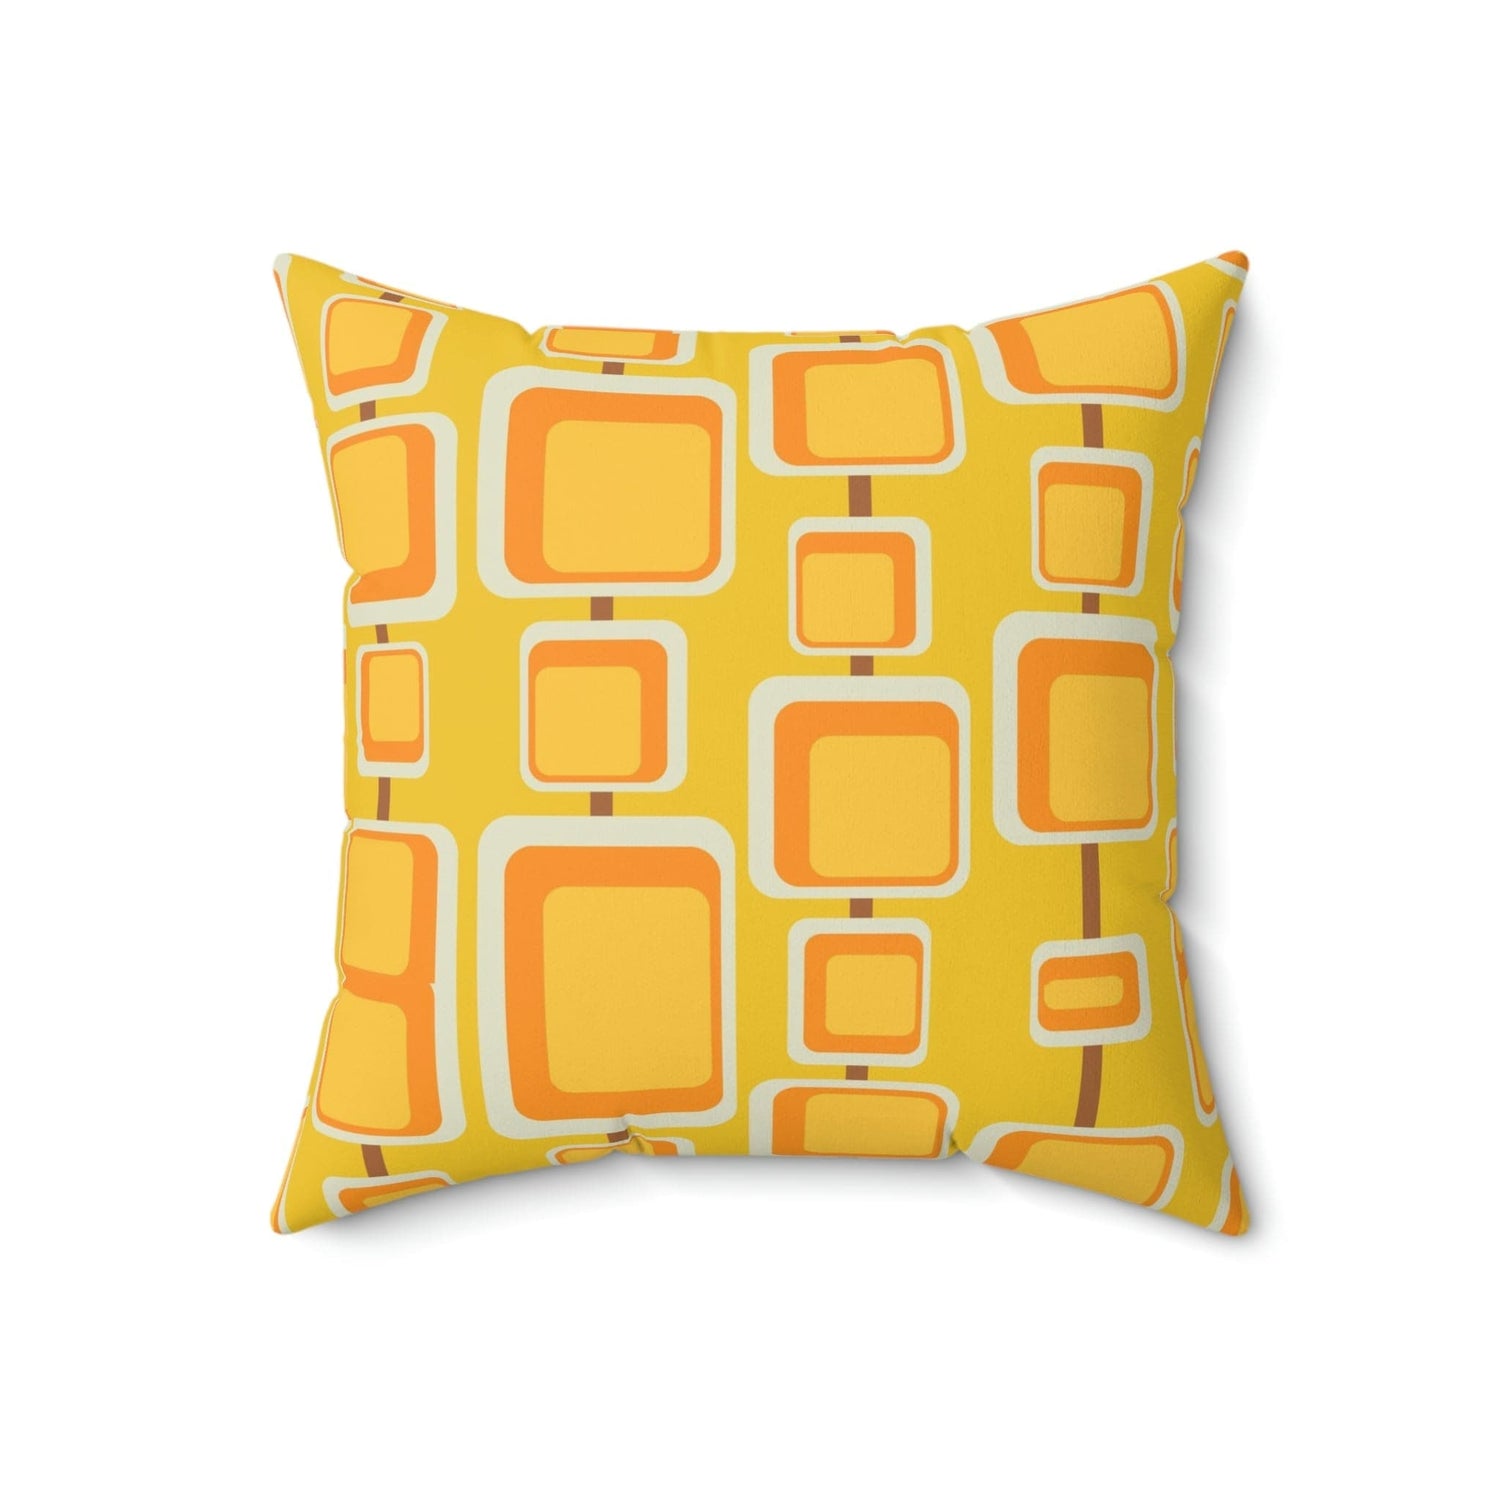 Mid Century Modern, Mustard Yellow, Orange, Geometric Retro Design Pillow Case And Insert Home Decor